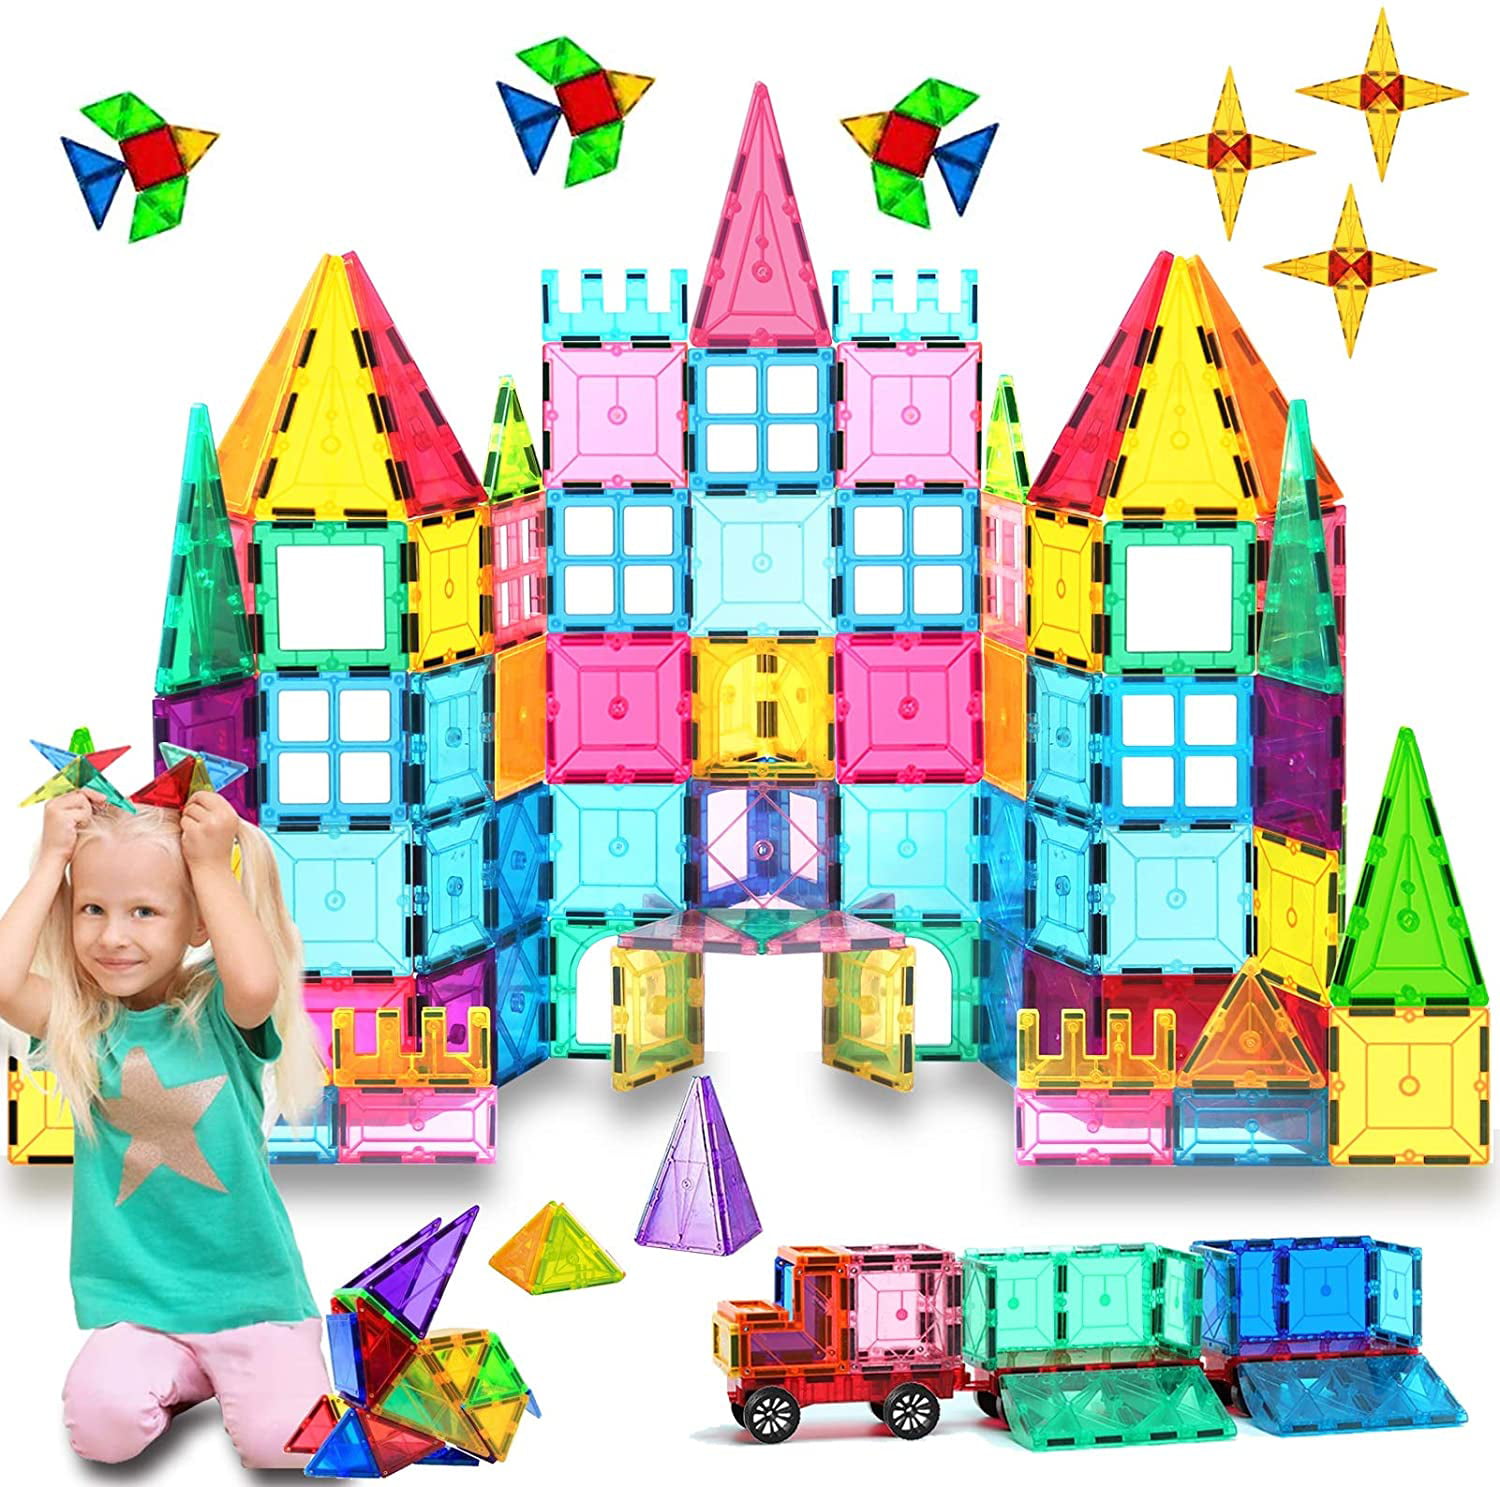 HOMOFY Kids Magnet TilesToys 75Pcs Oversize 3D Magnetic Building Blocks Tiles Set,Inspirational Educational Toys for 3 4 5 6 Year Old Boys Gilrs Gifts 